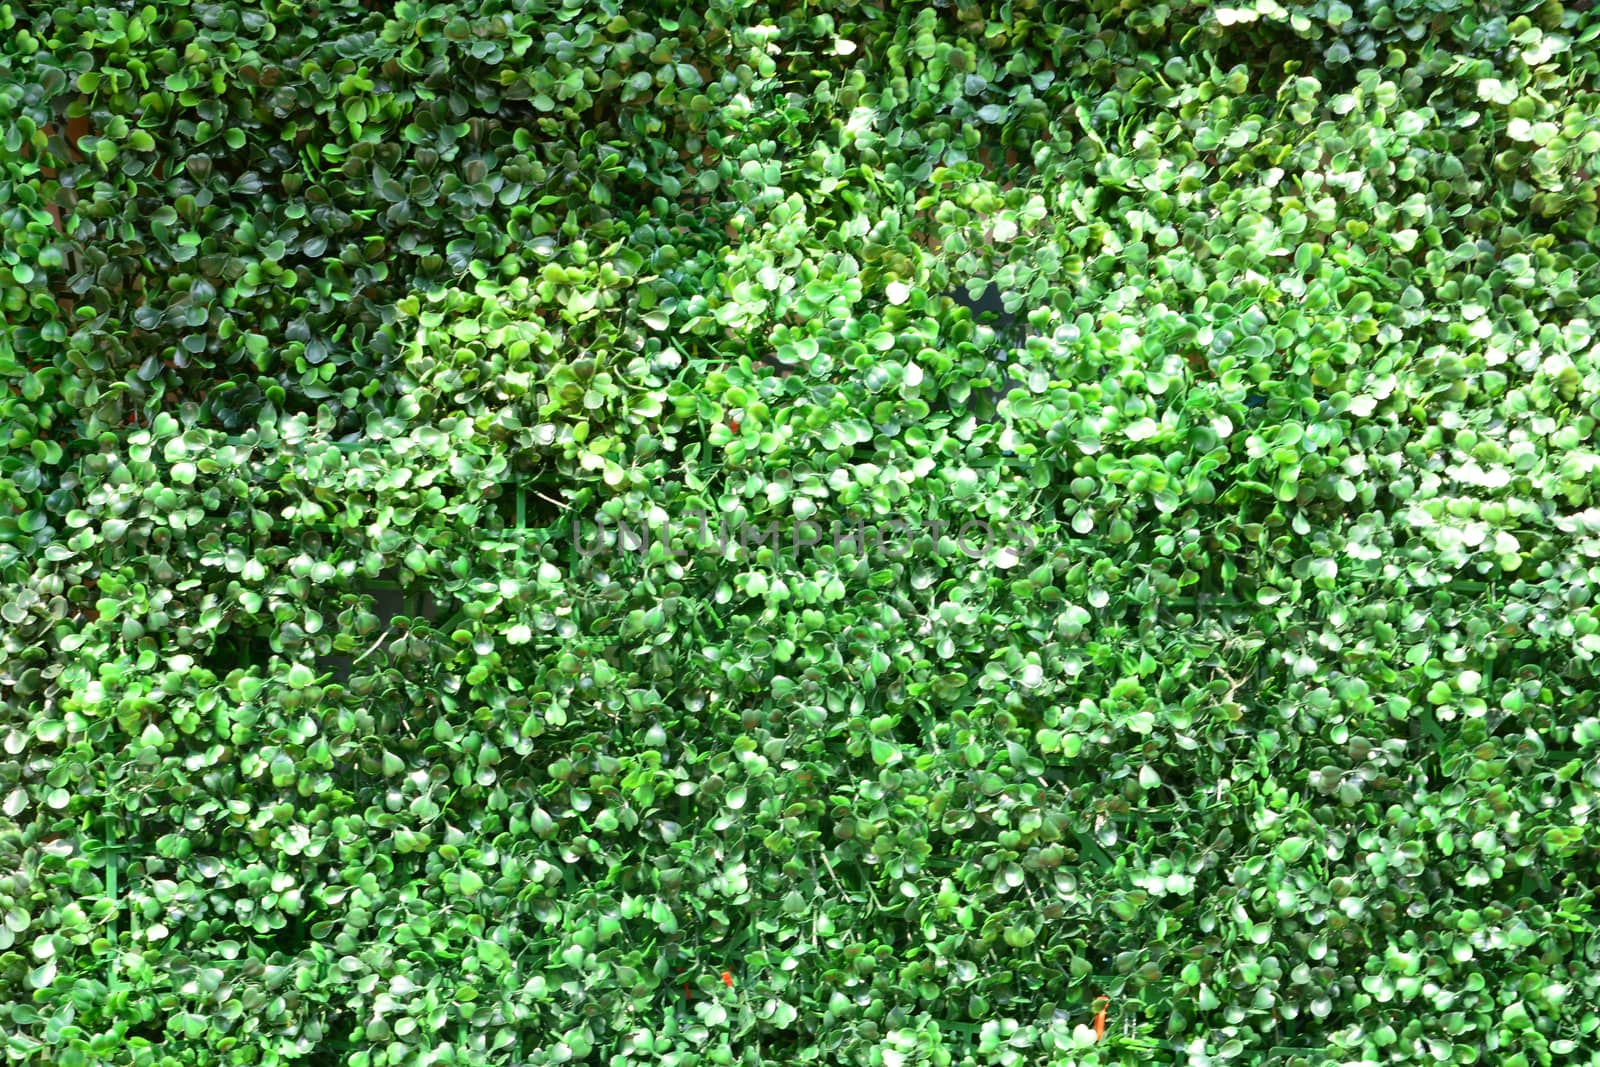 Green Leaf background